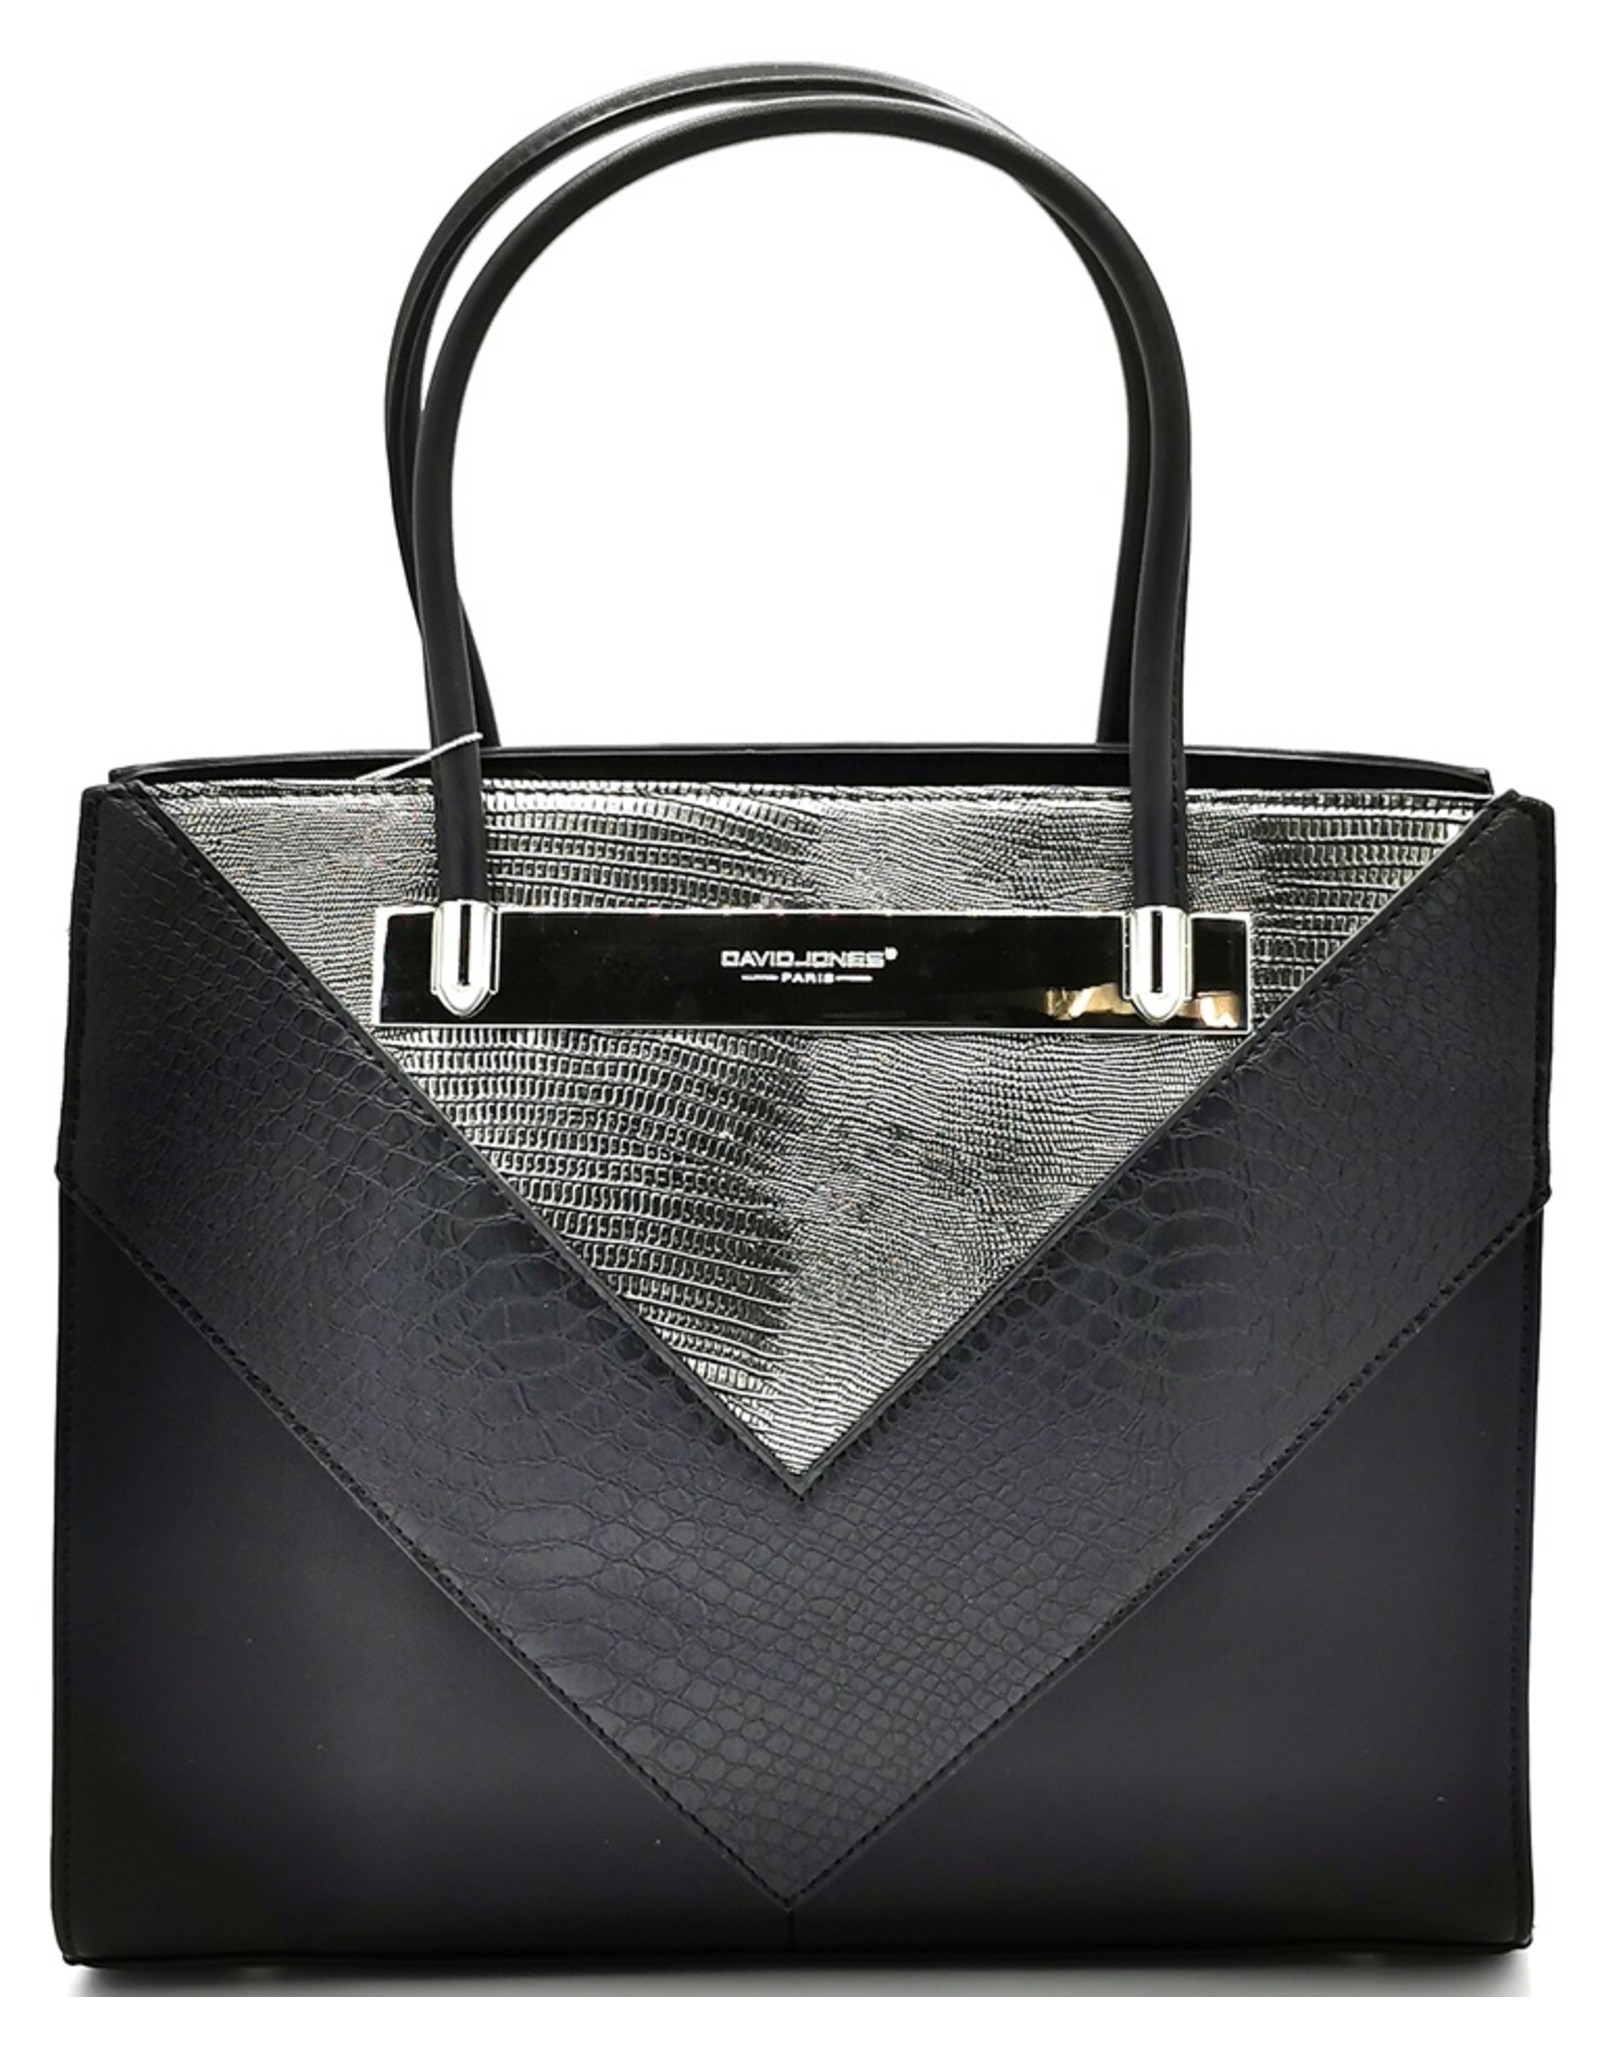 David Jones Fashion bags - David Jones Handbag Black